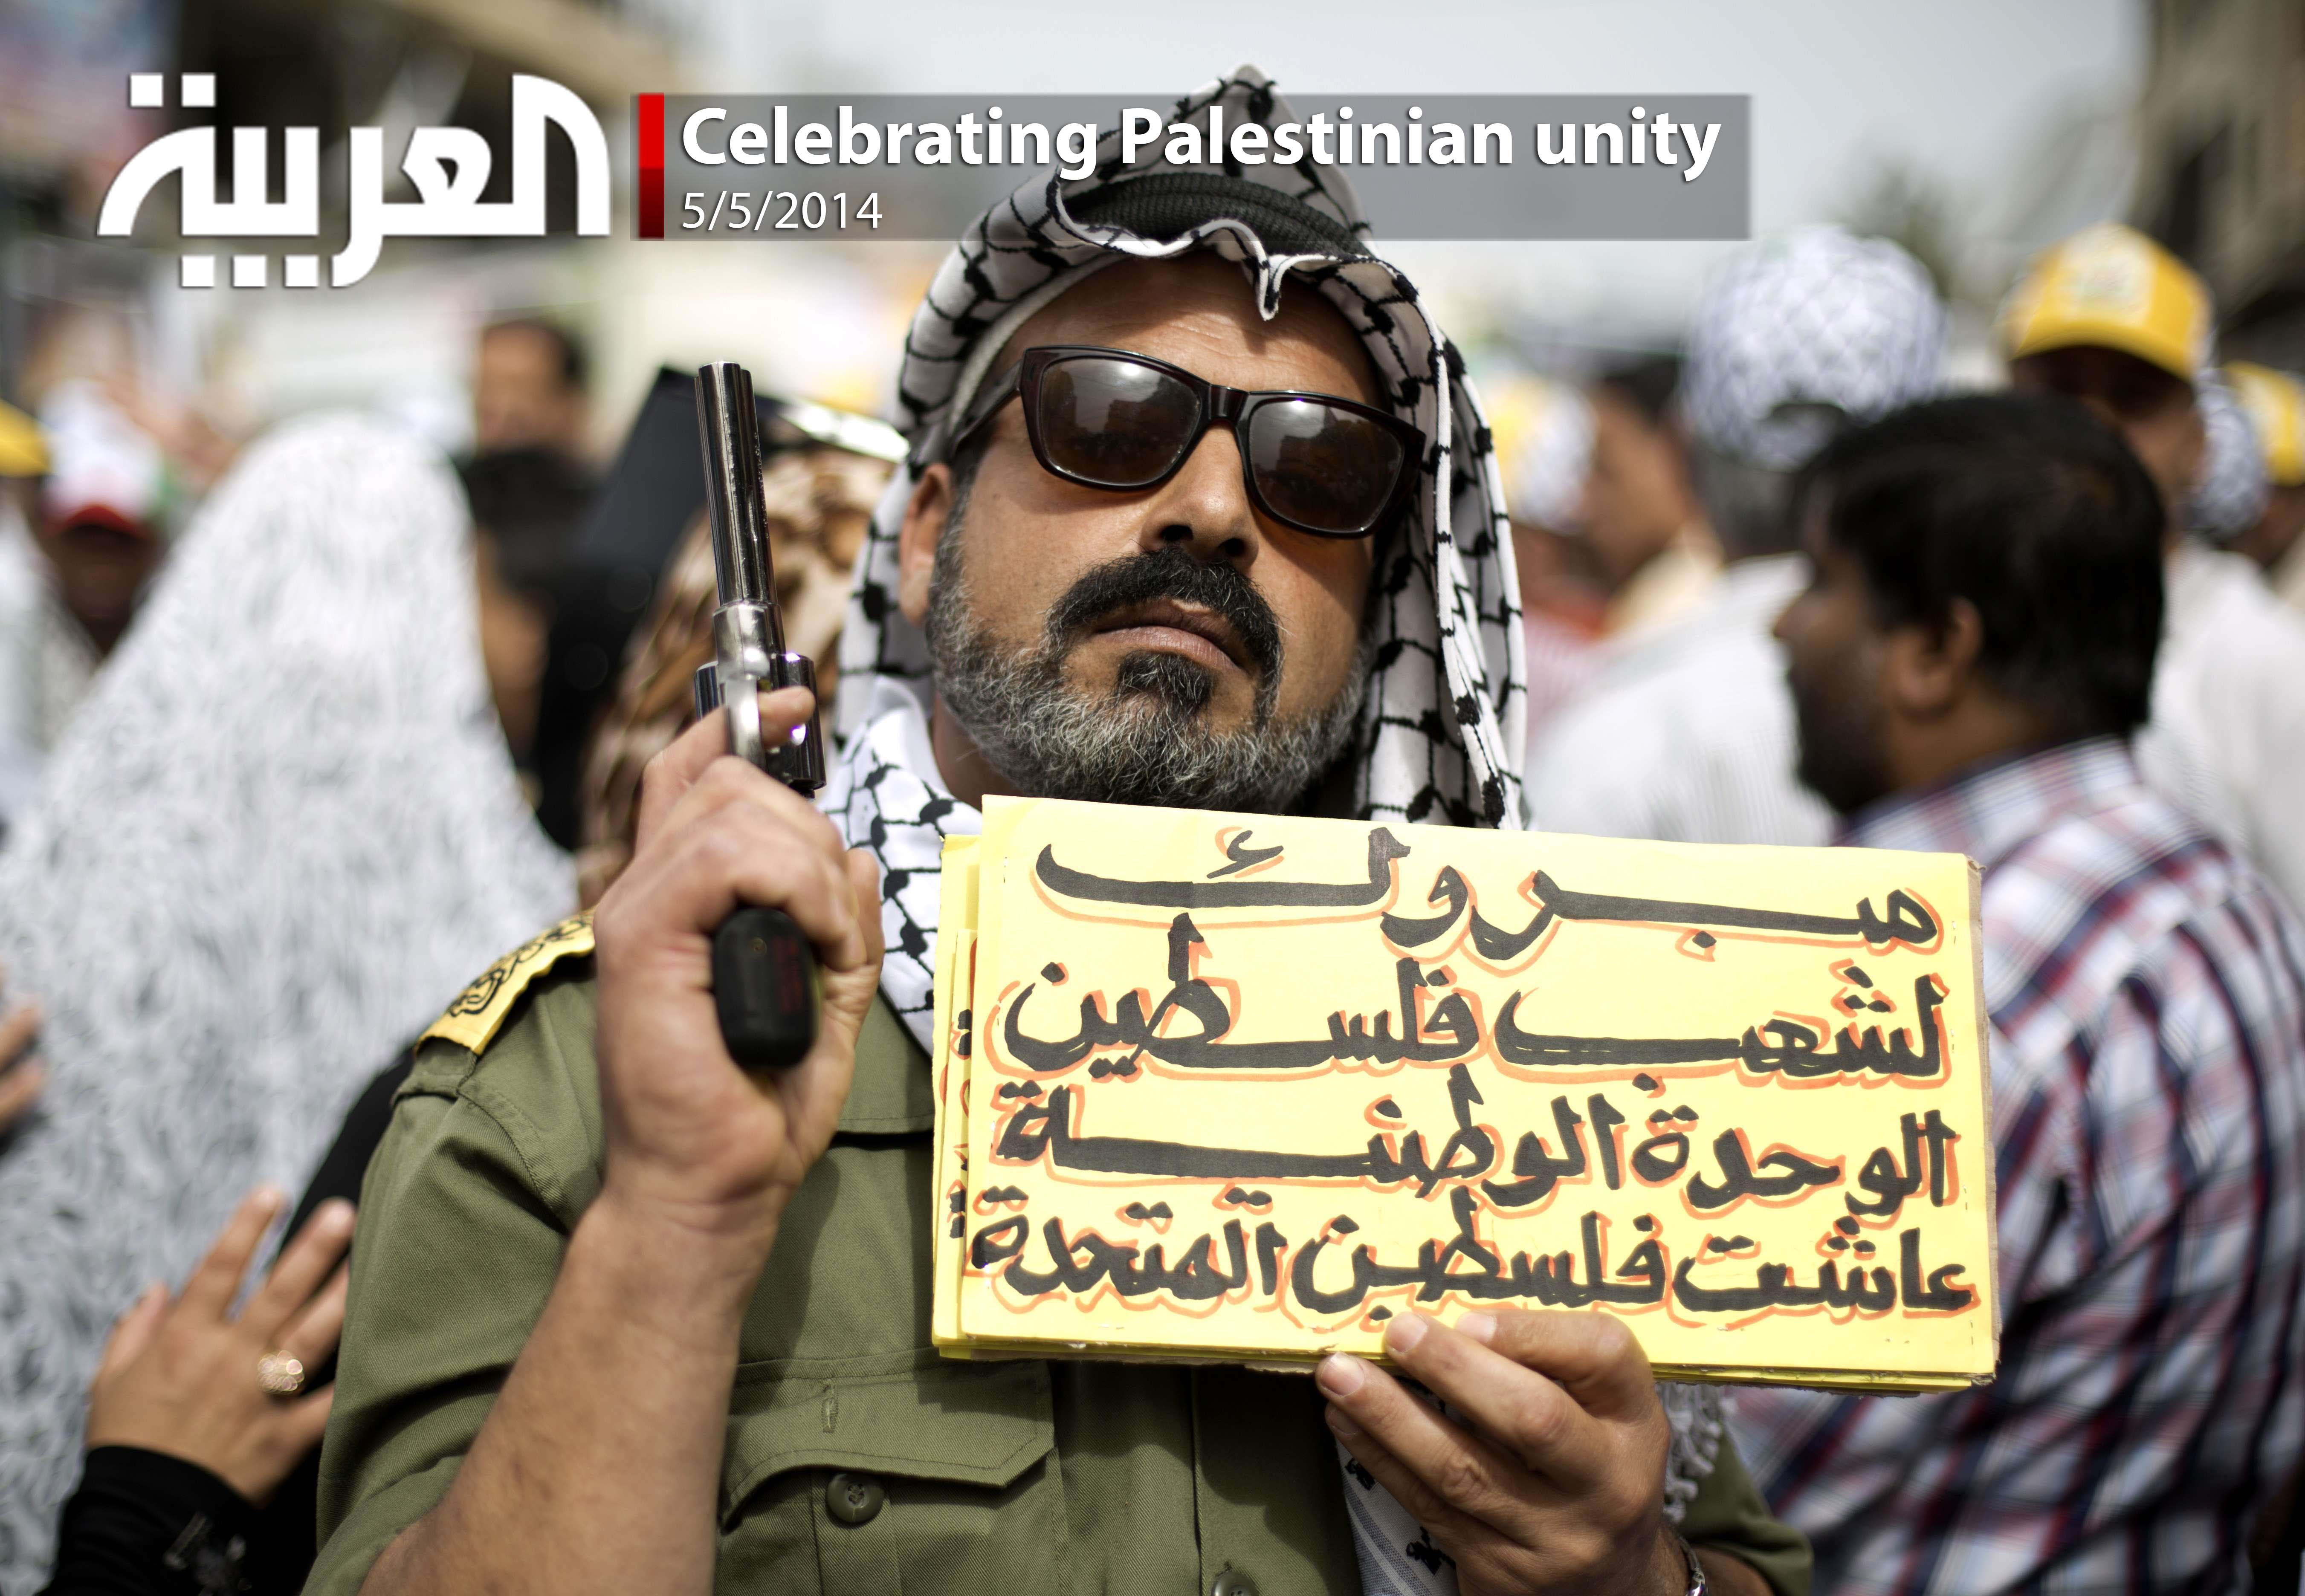 Celebrating Palestinian unity